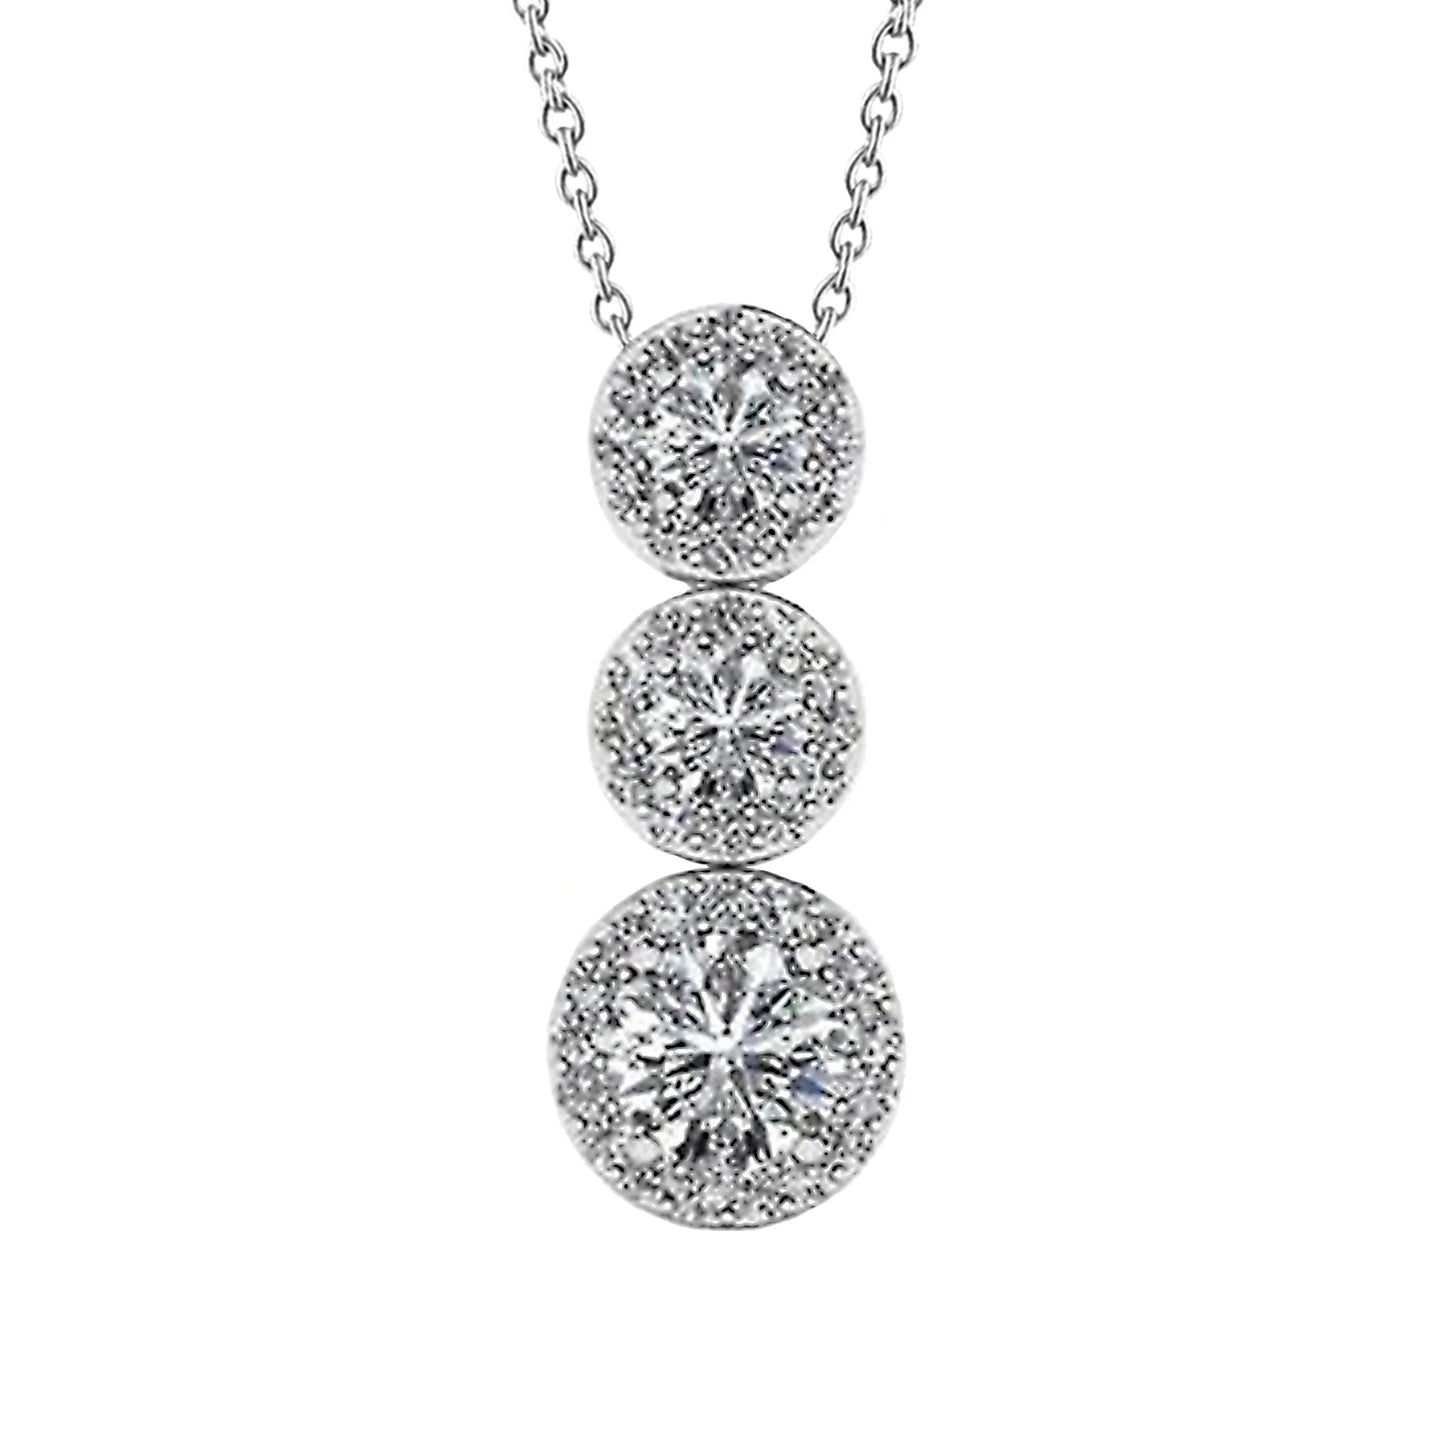 Round Genuine Brilliant Cut Diamonds 6 Ct Pendant Necklace